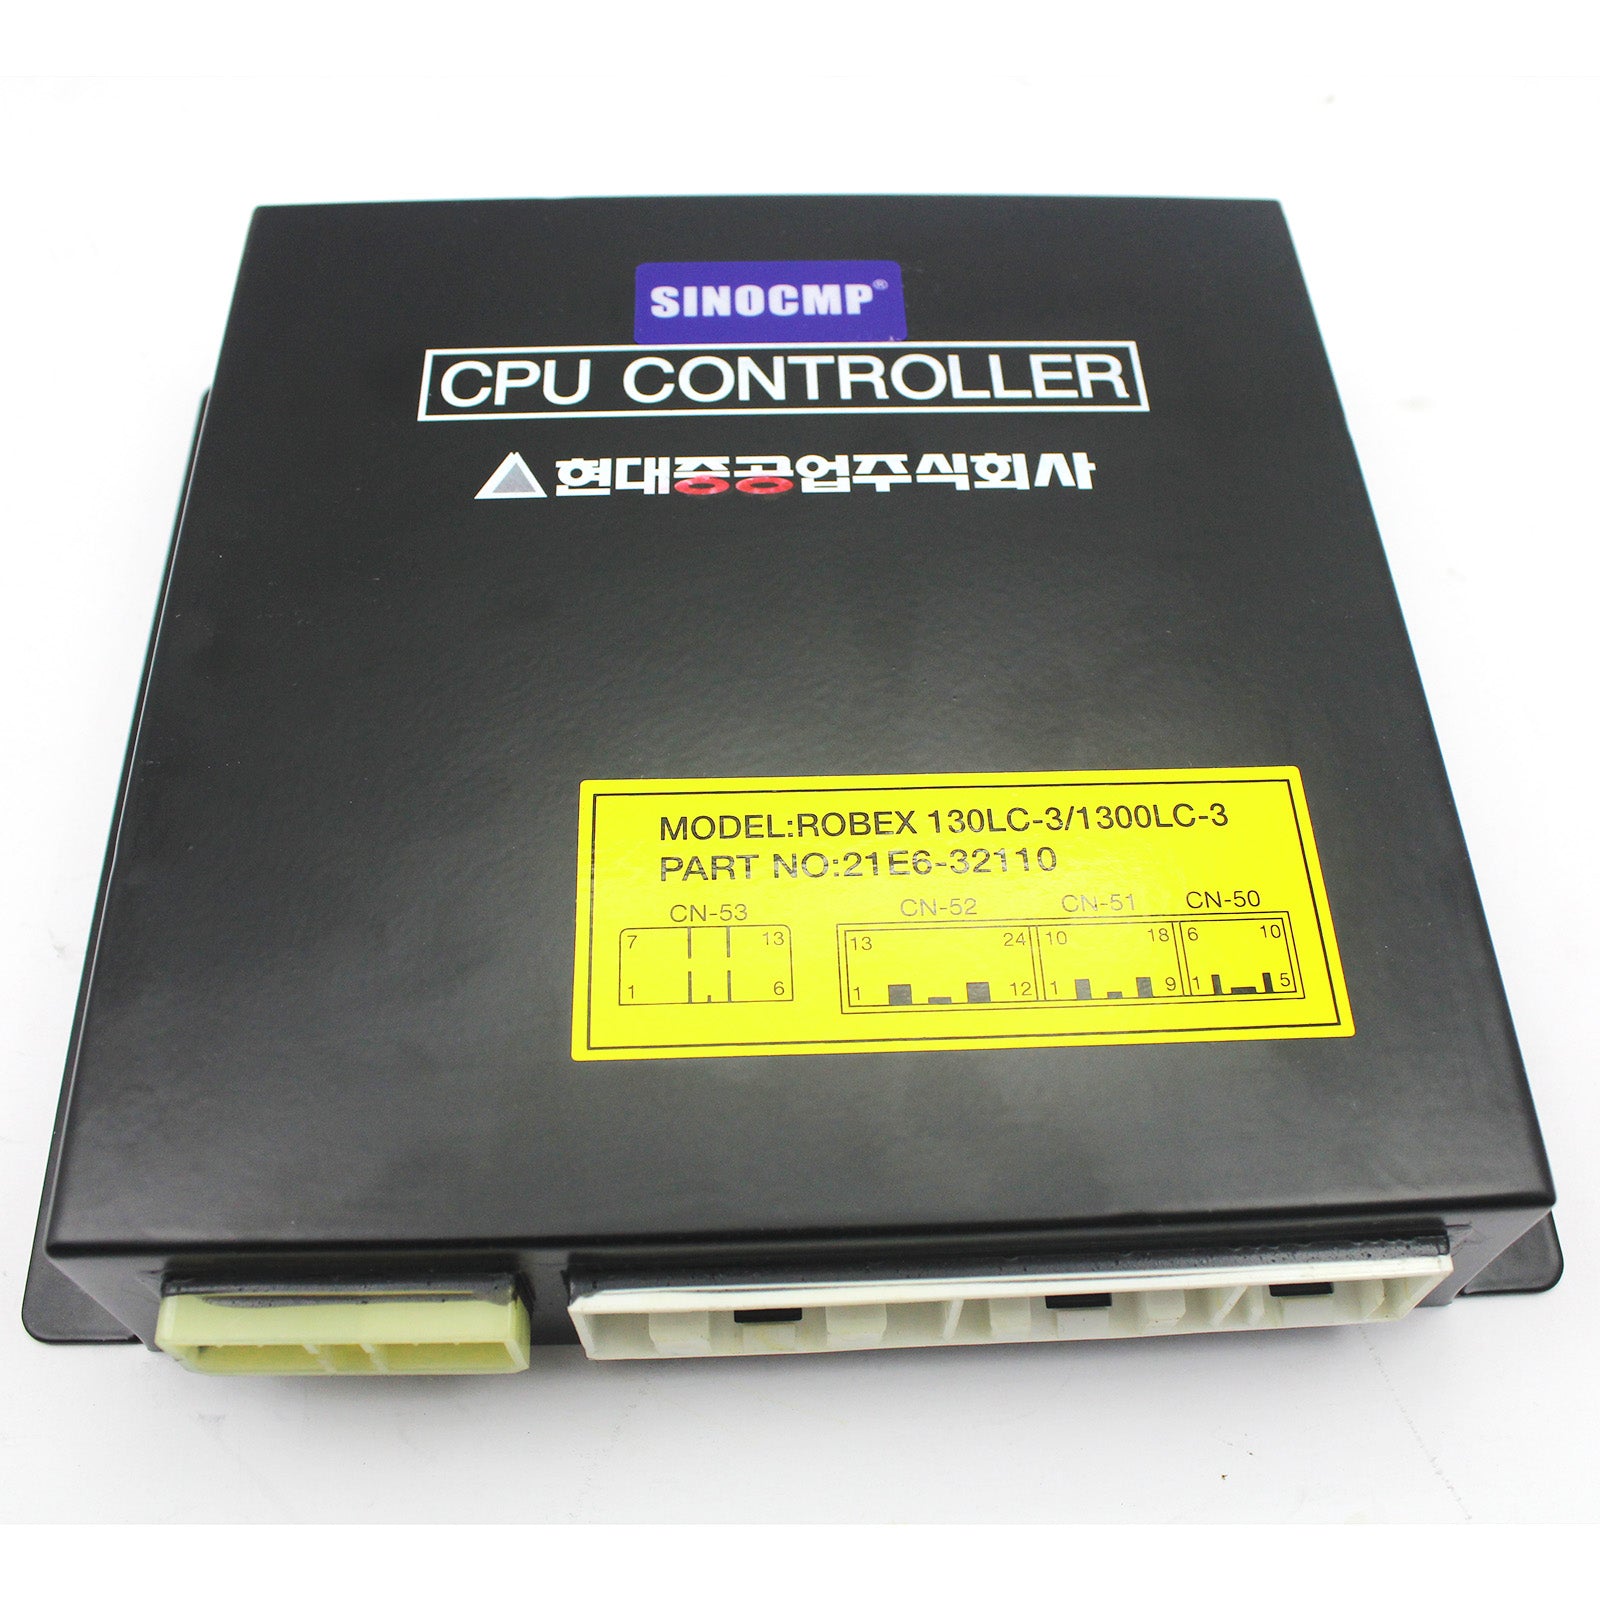 21E6-32110 Hyundai Excavator R130LC-3 CPU Controller Control Box